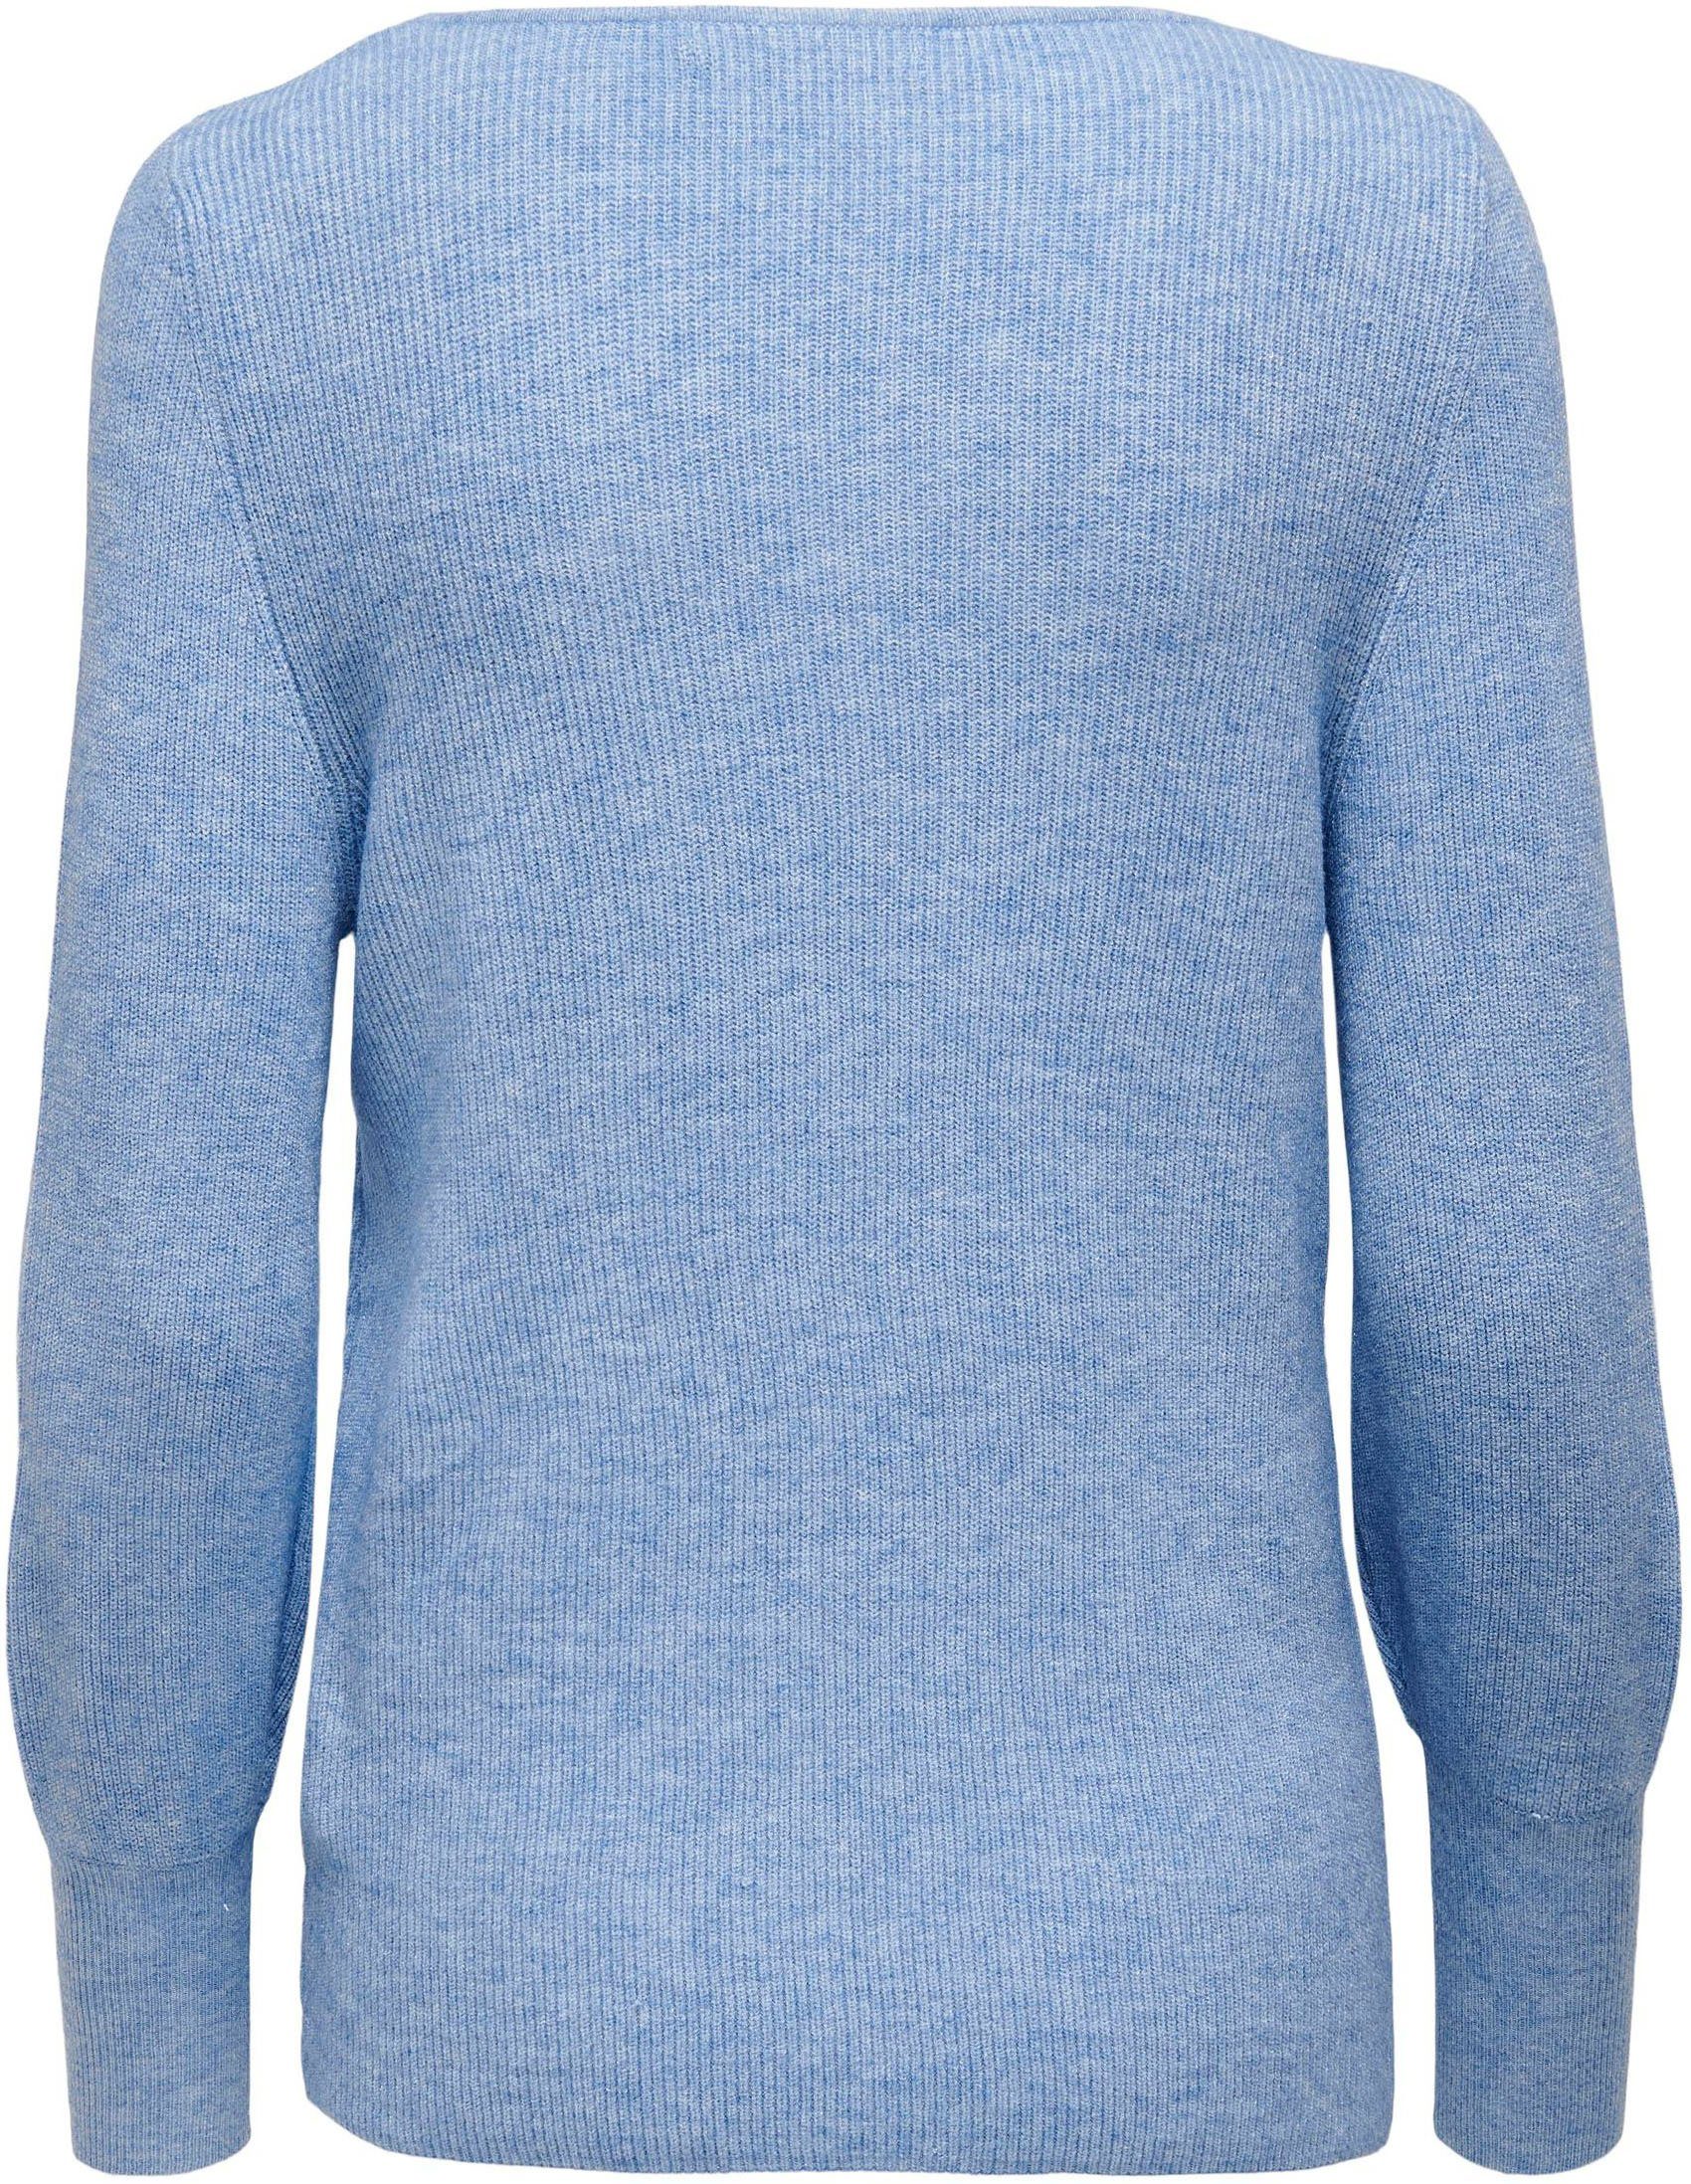 L/S V-Ausschnitt-Pullover sodalite V-NECK CUFF blue ONLATIA melange KNT ONLY